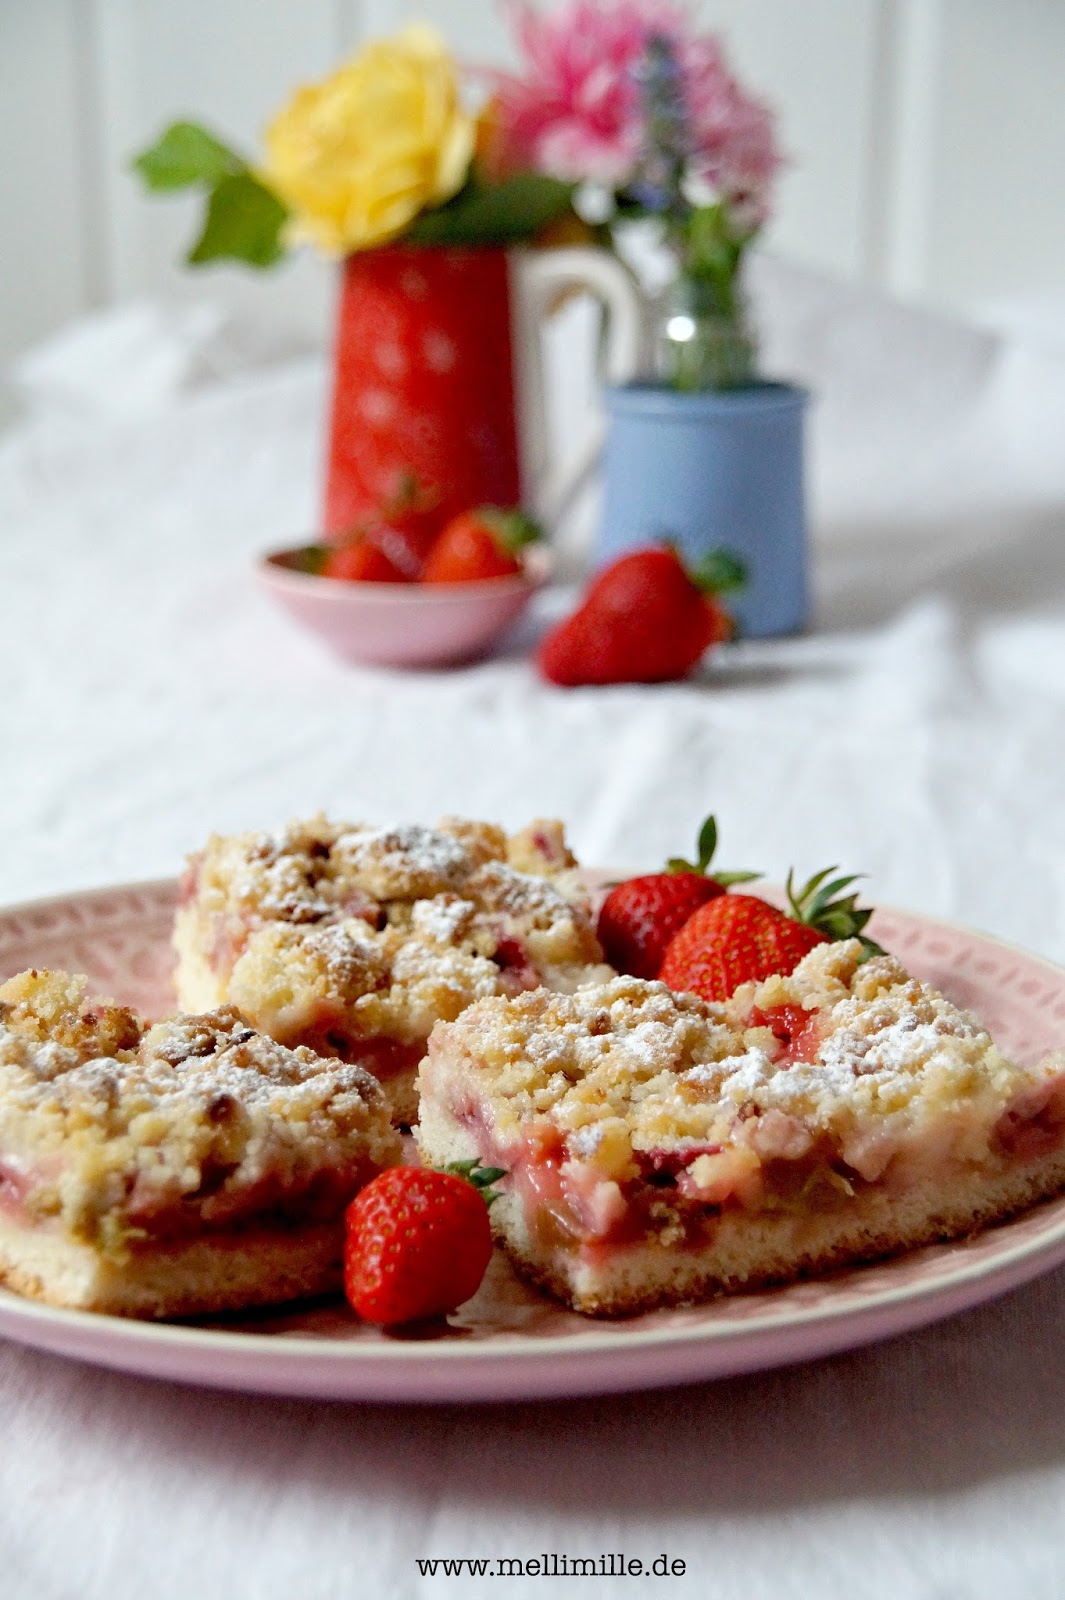 mellimille: Rhabarber-Erdbeer-Streuselkuchen vom Blech